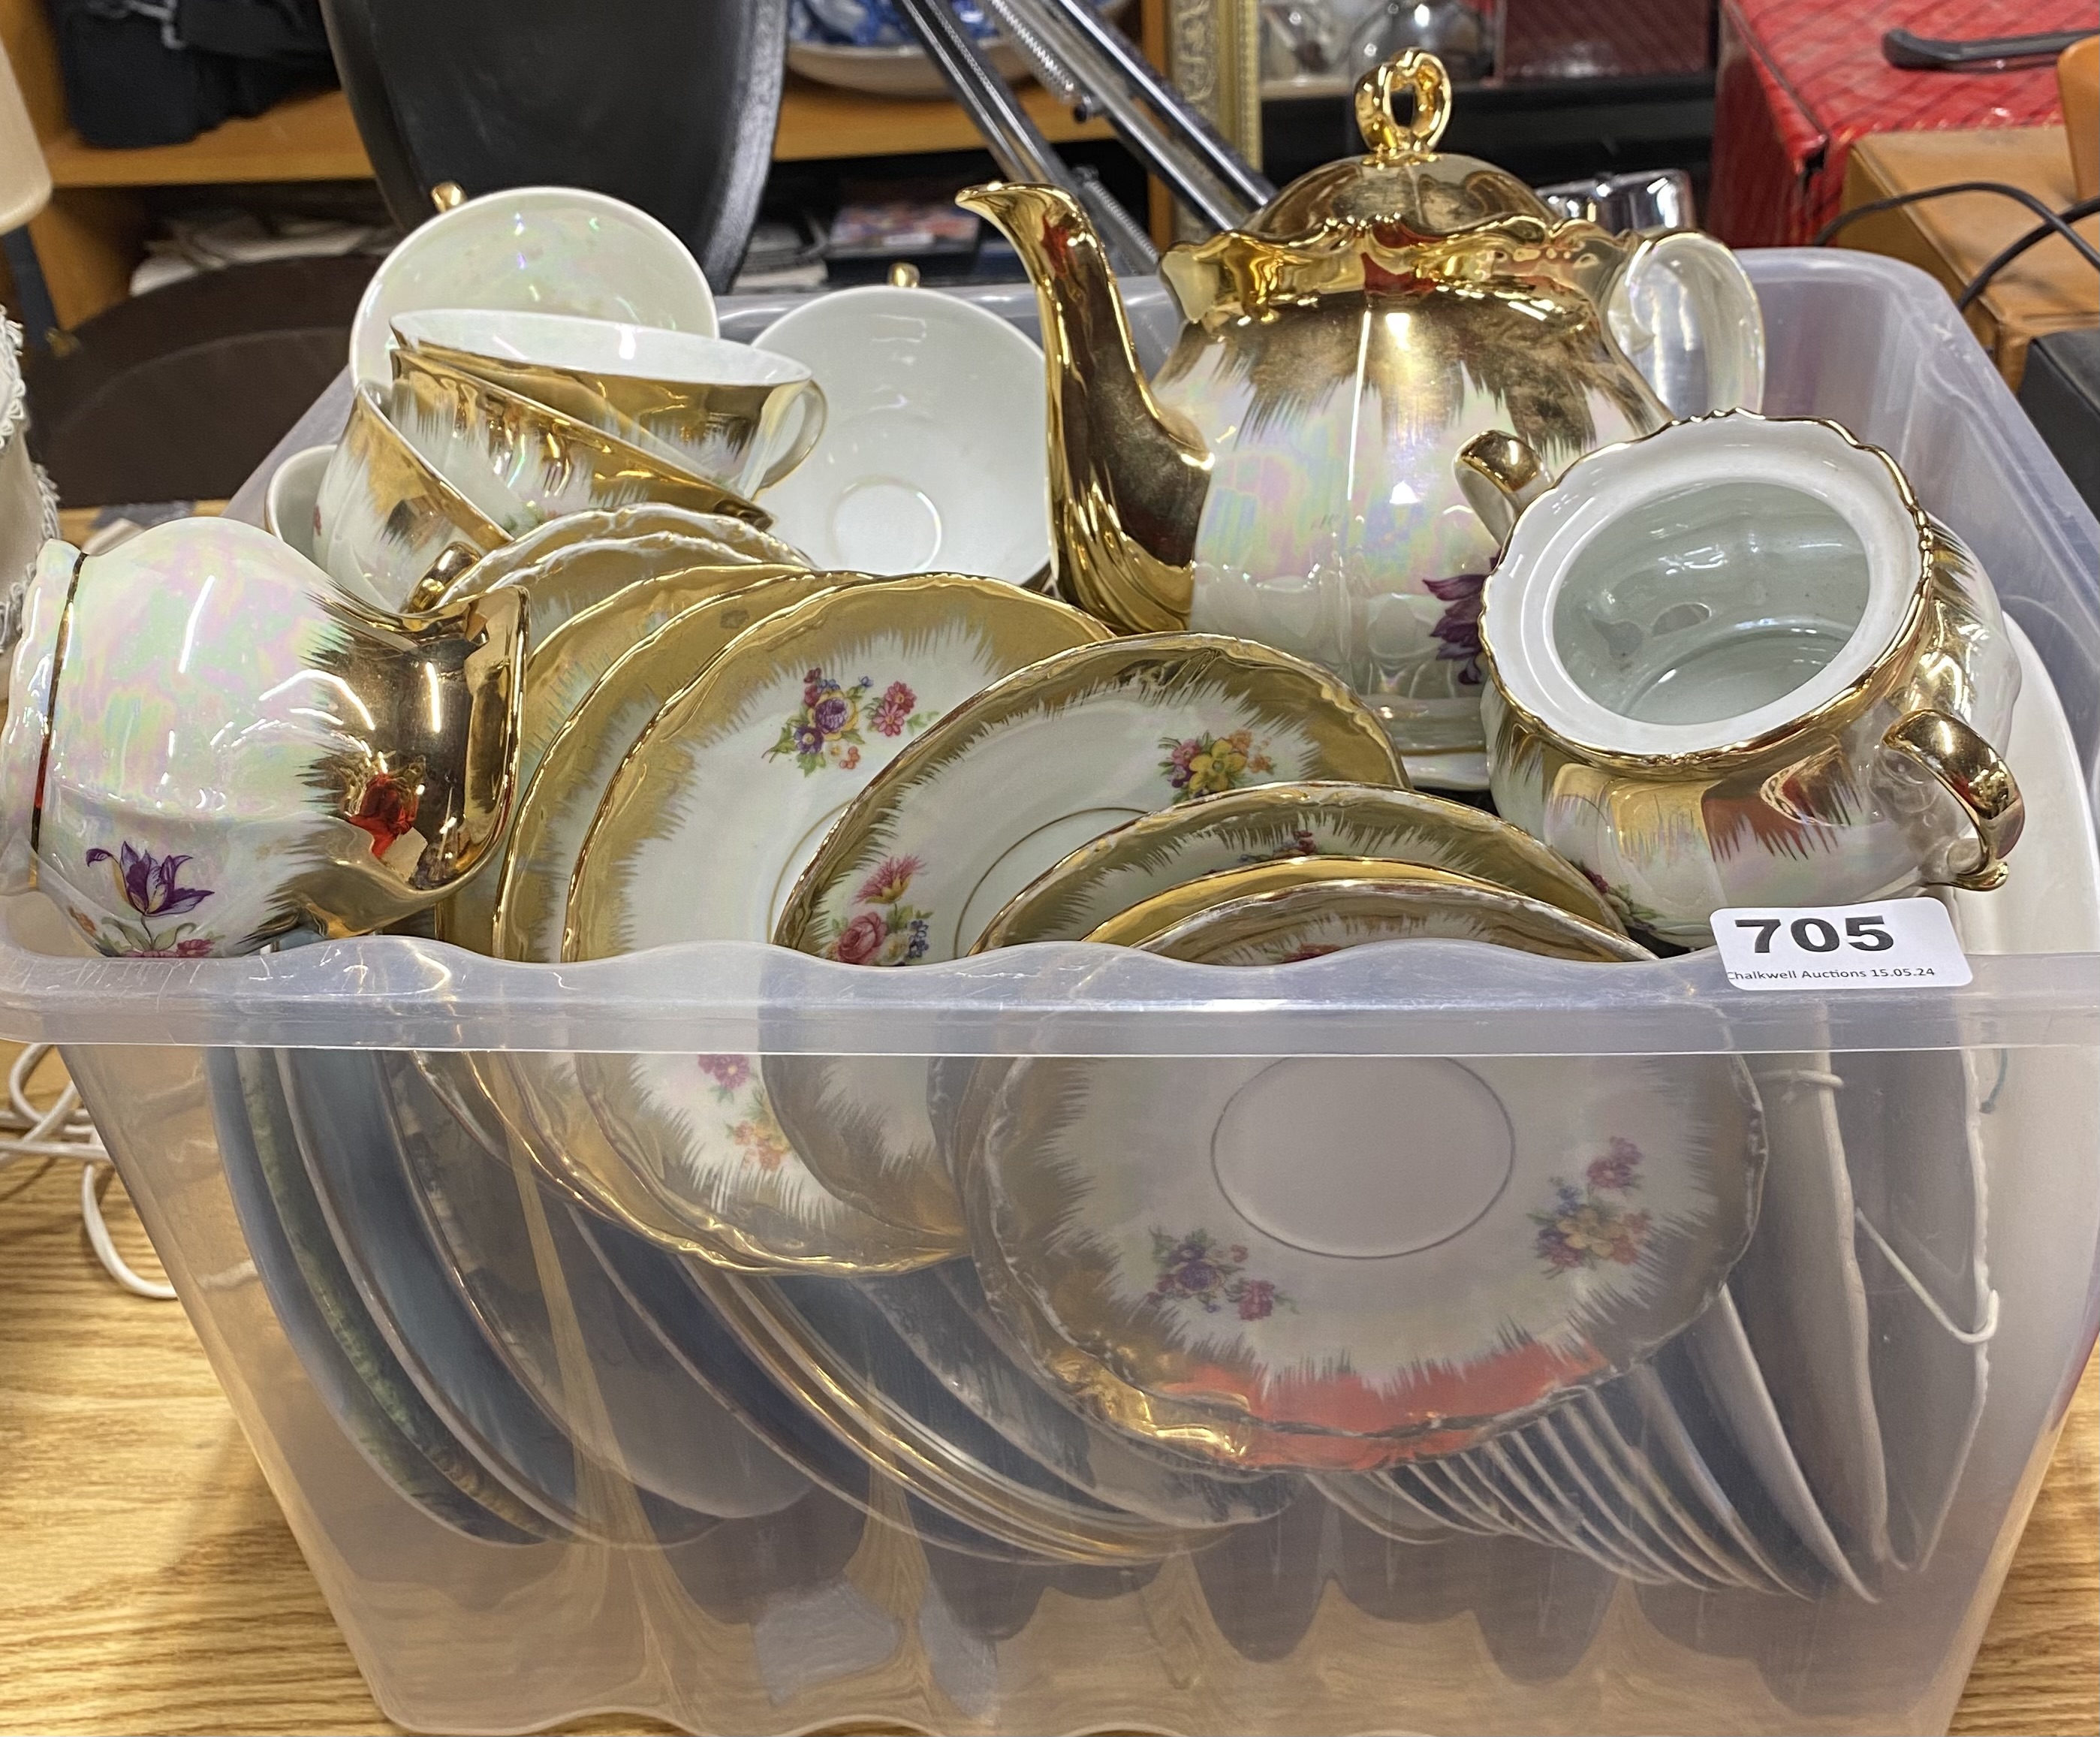 A box of good mixed china, including a lustre tea set.